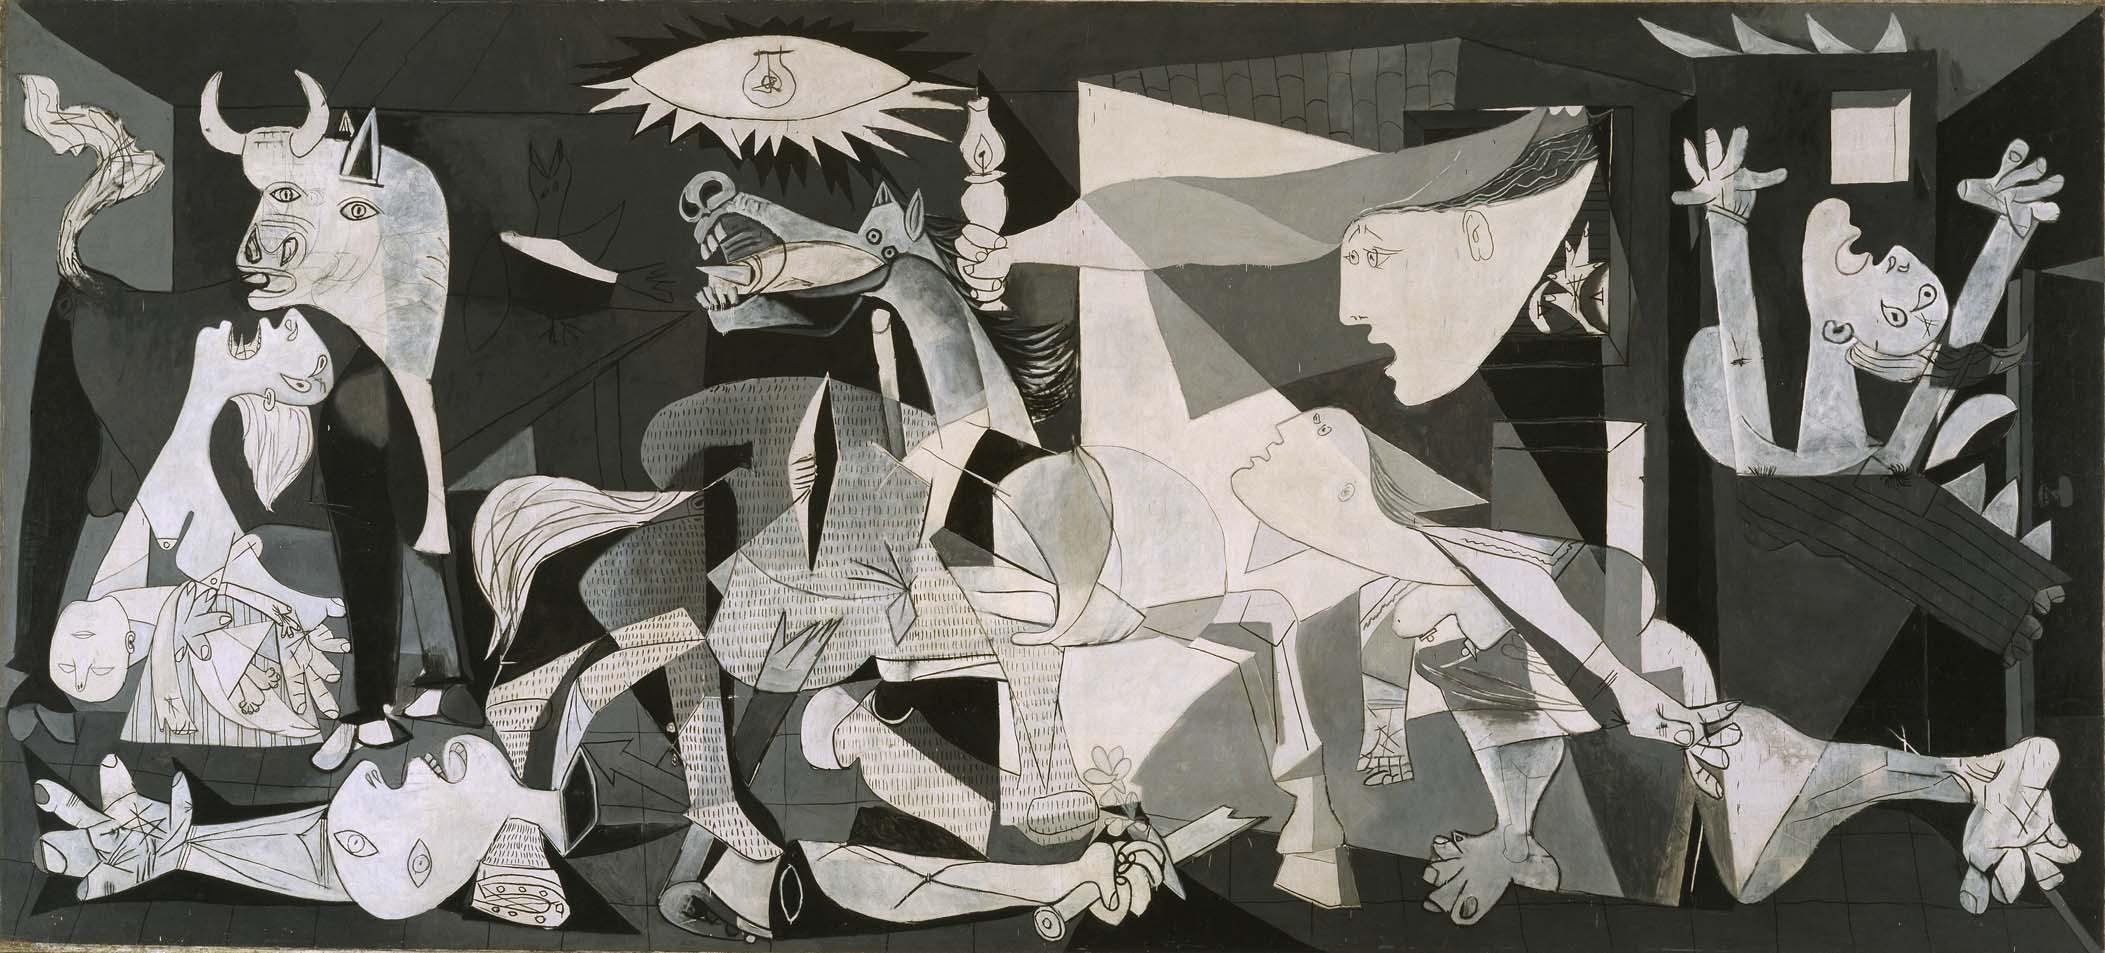 Герника by Pablo Picasso - 1937 - 349 cm × 776 cm 